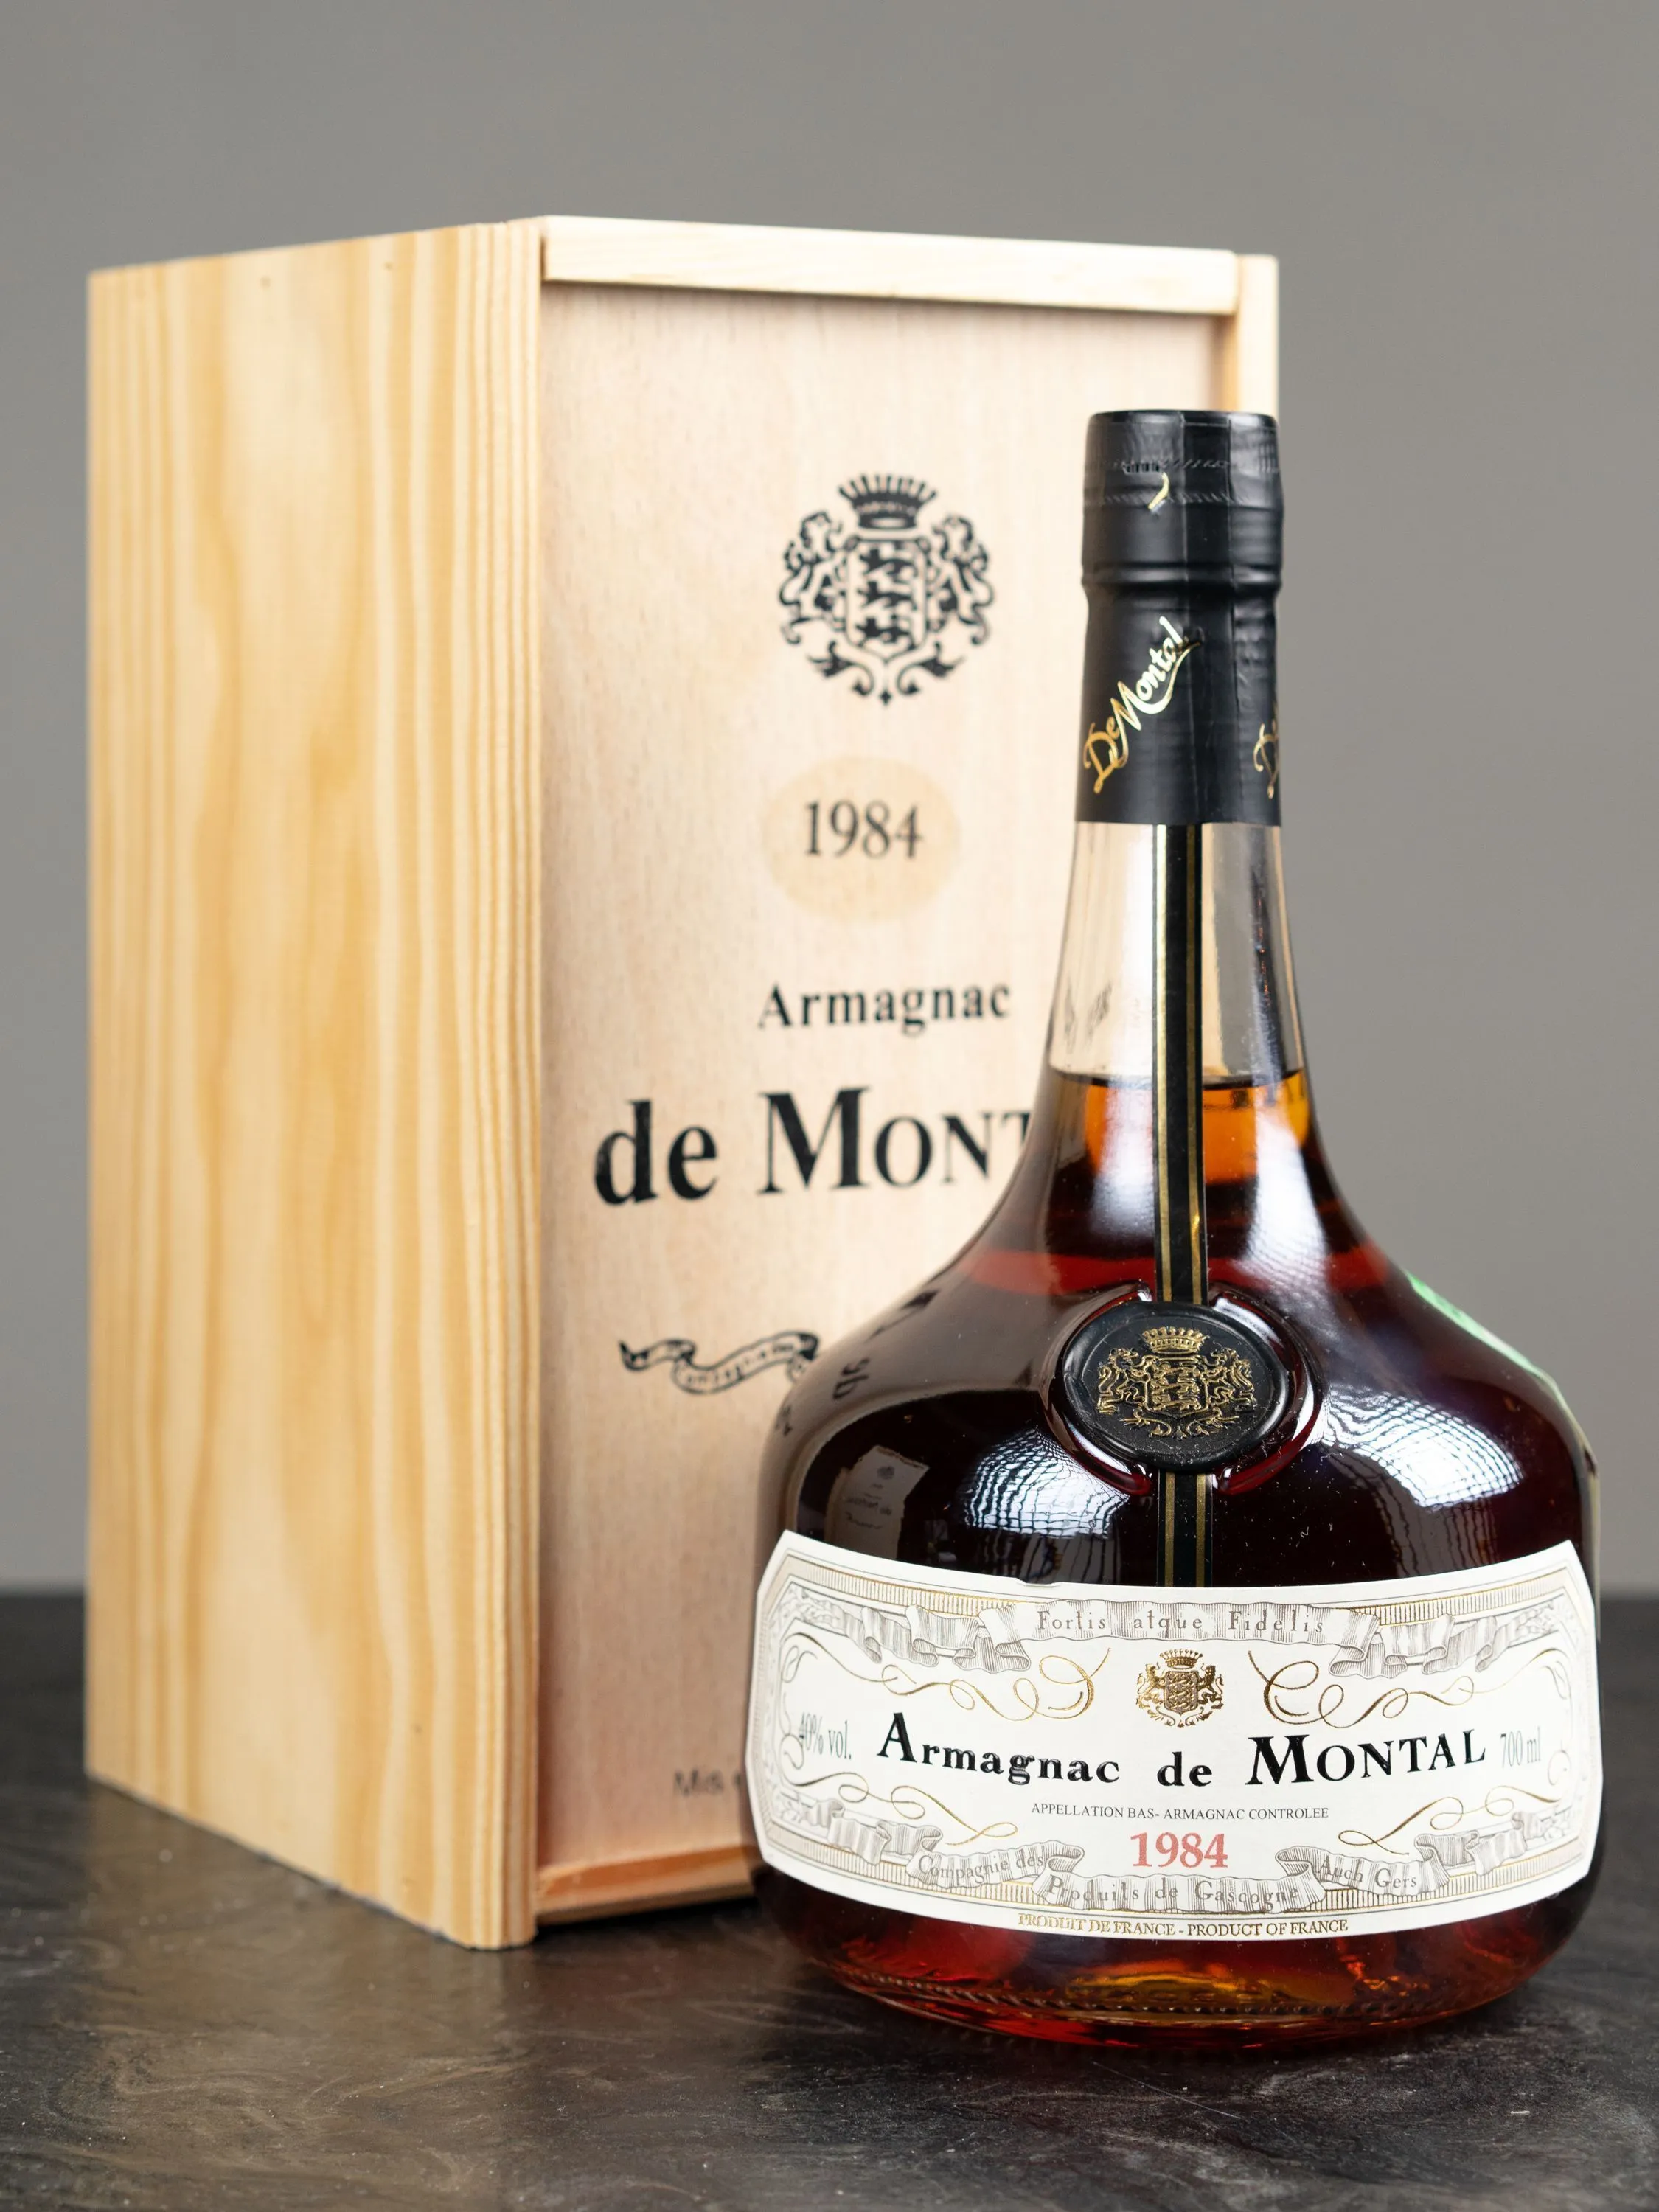 Bas armagnac xo 0.7. Арманьяк de Montal. Арманьяк де Монталь. Арманьяк Armagnac de Montal, 1977, Gift Box, 0.7 л. Арманьяк de Montal bas.